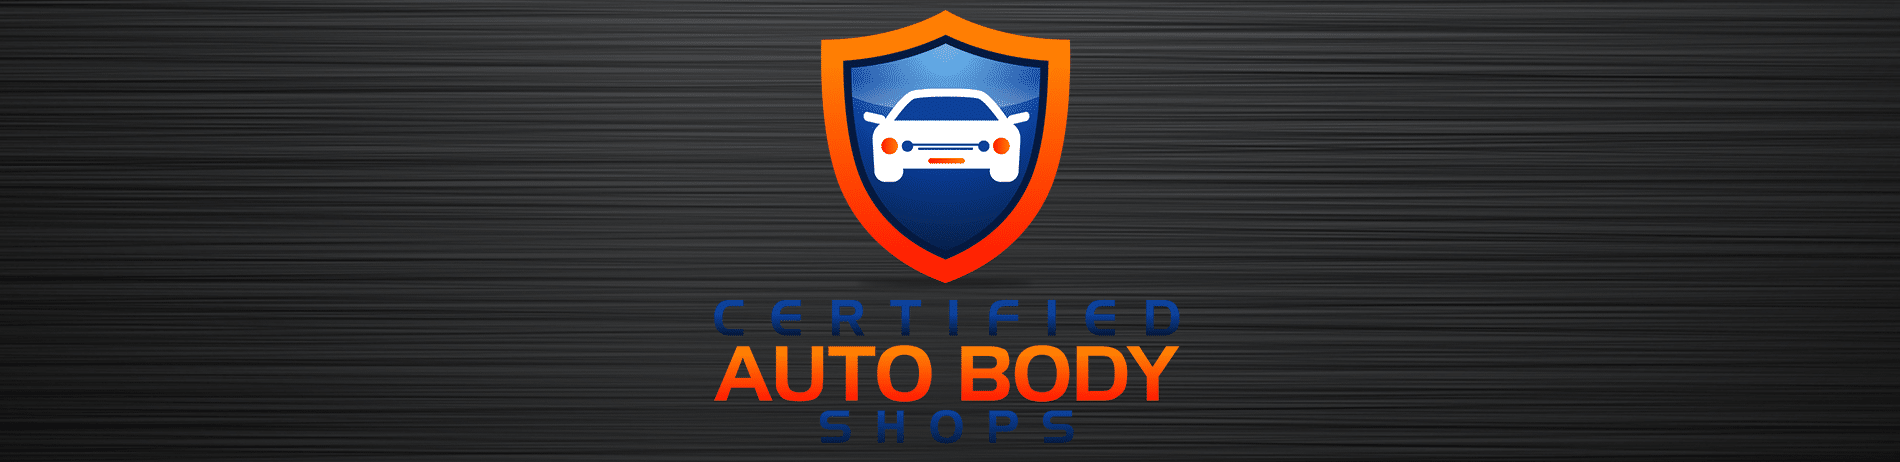 Jaguar Certified Auto Body Shop